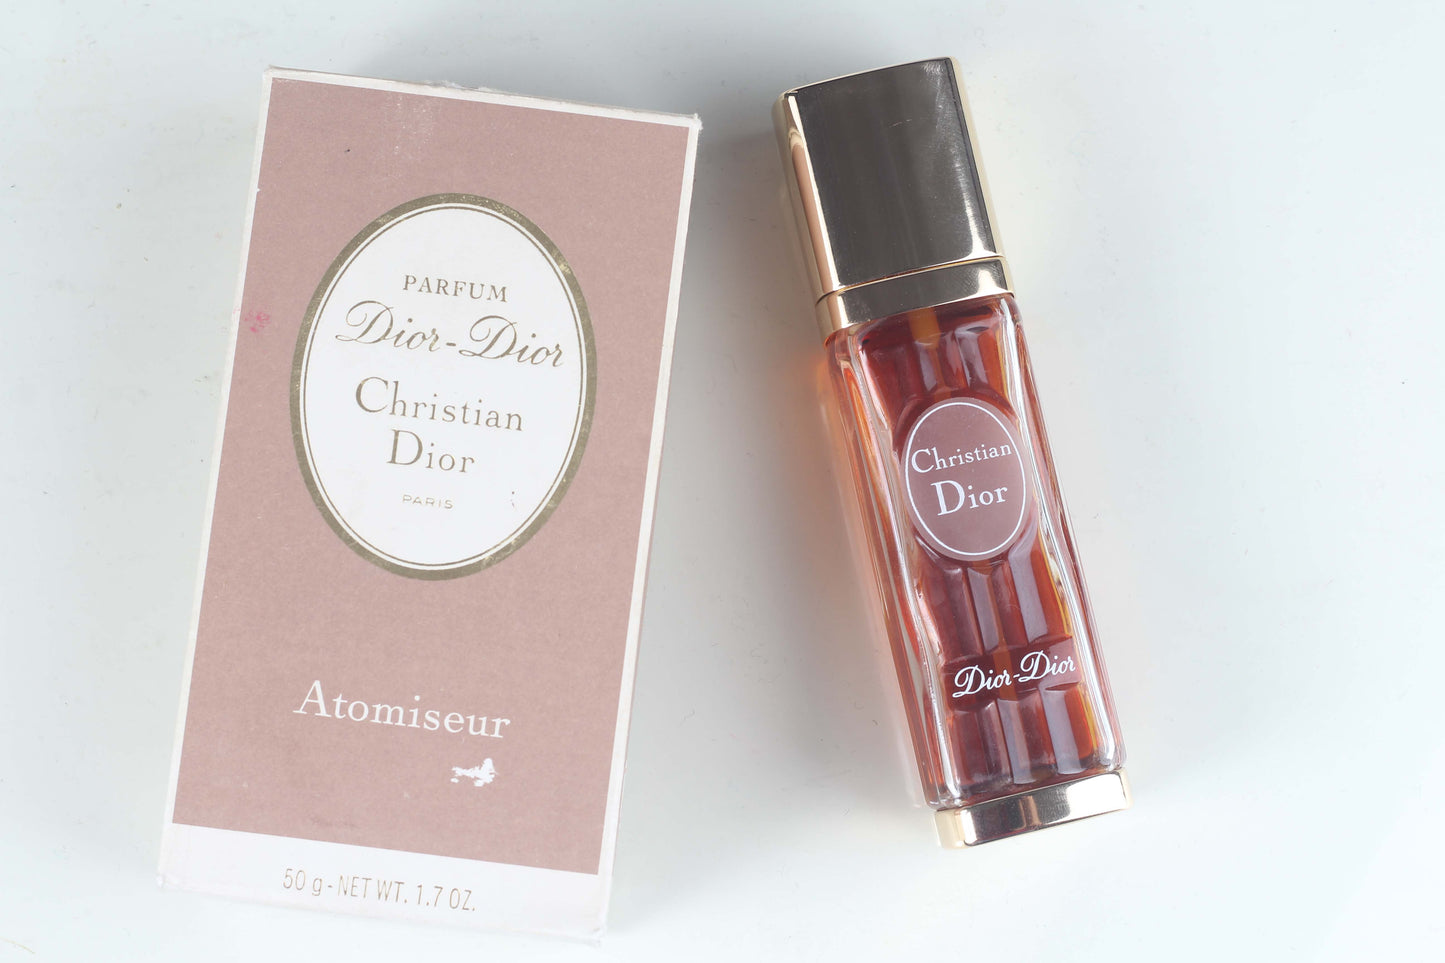 Dior Dior Christian Dior parfum Extrait spray 50 ml 1.7 oz, Vintage